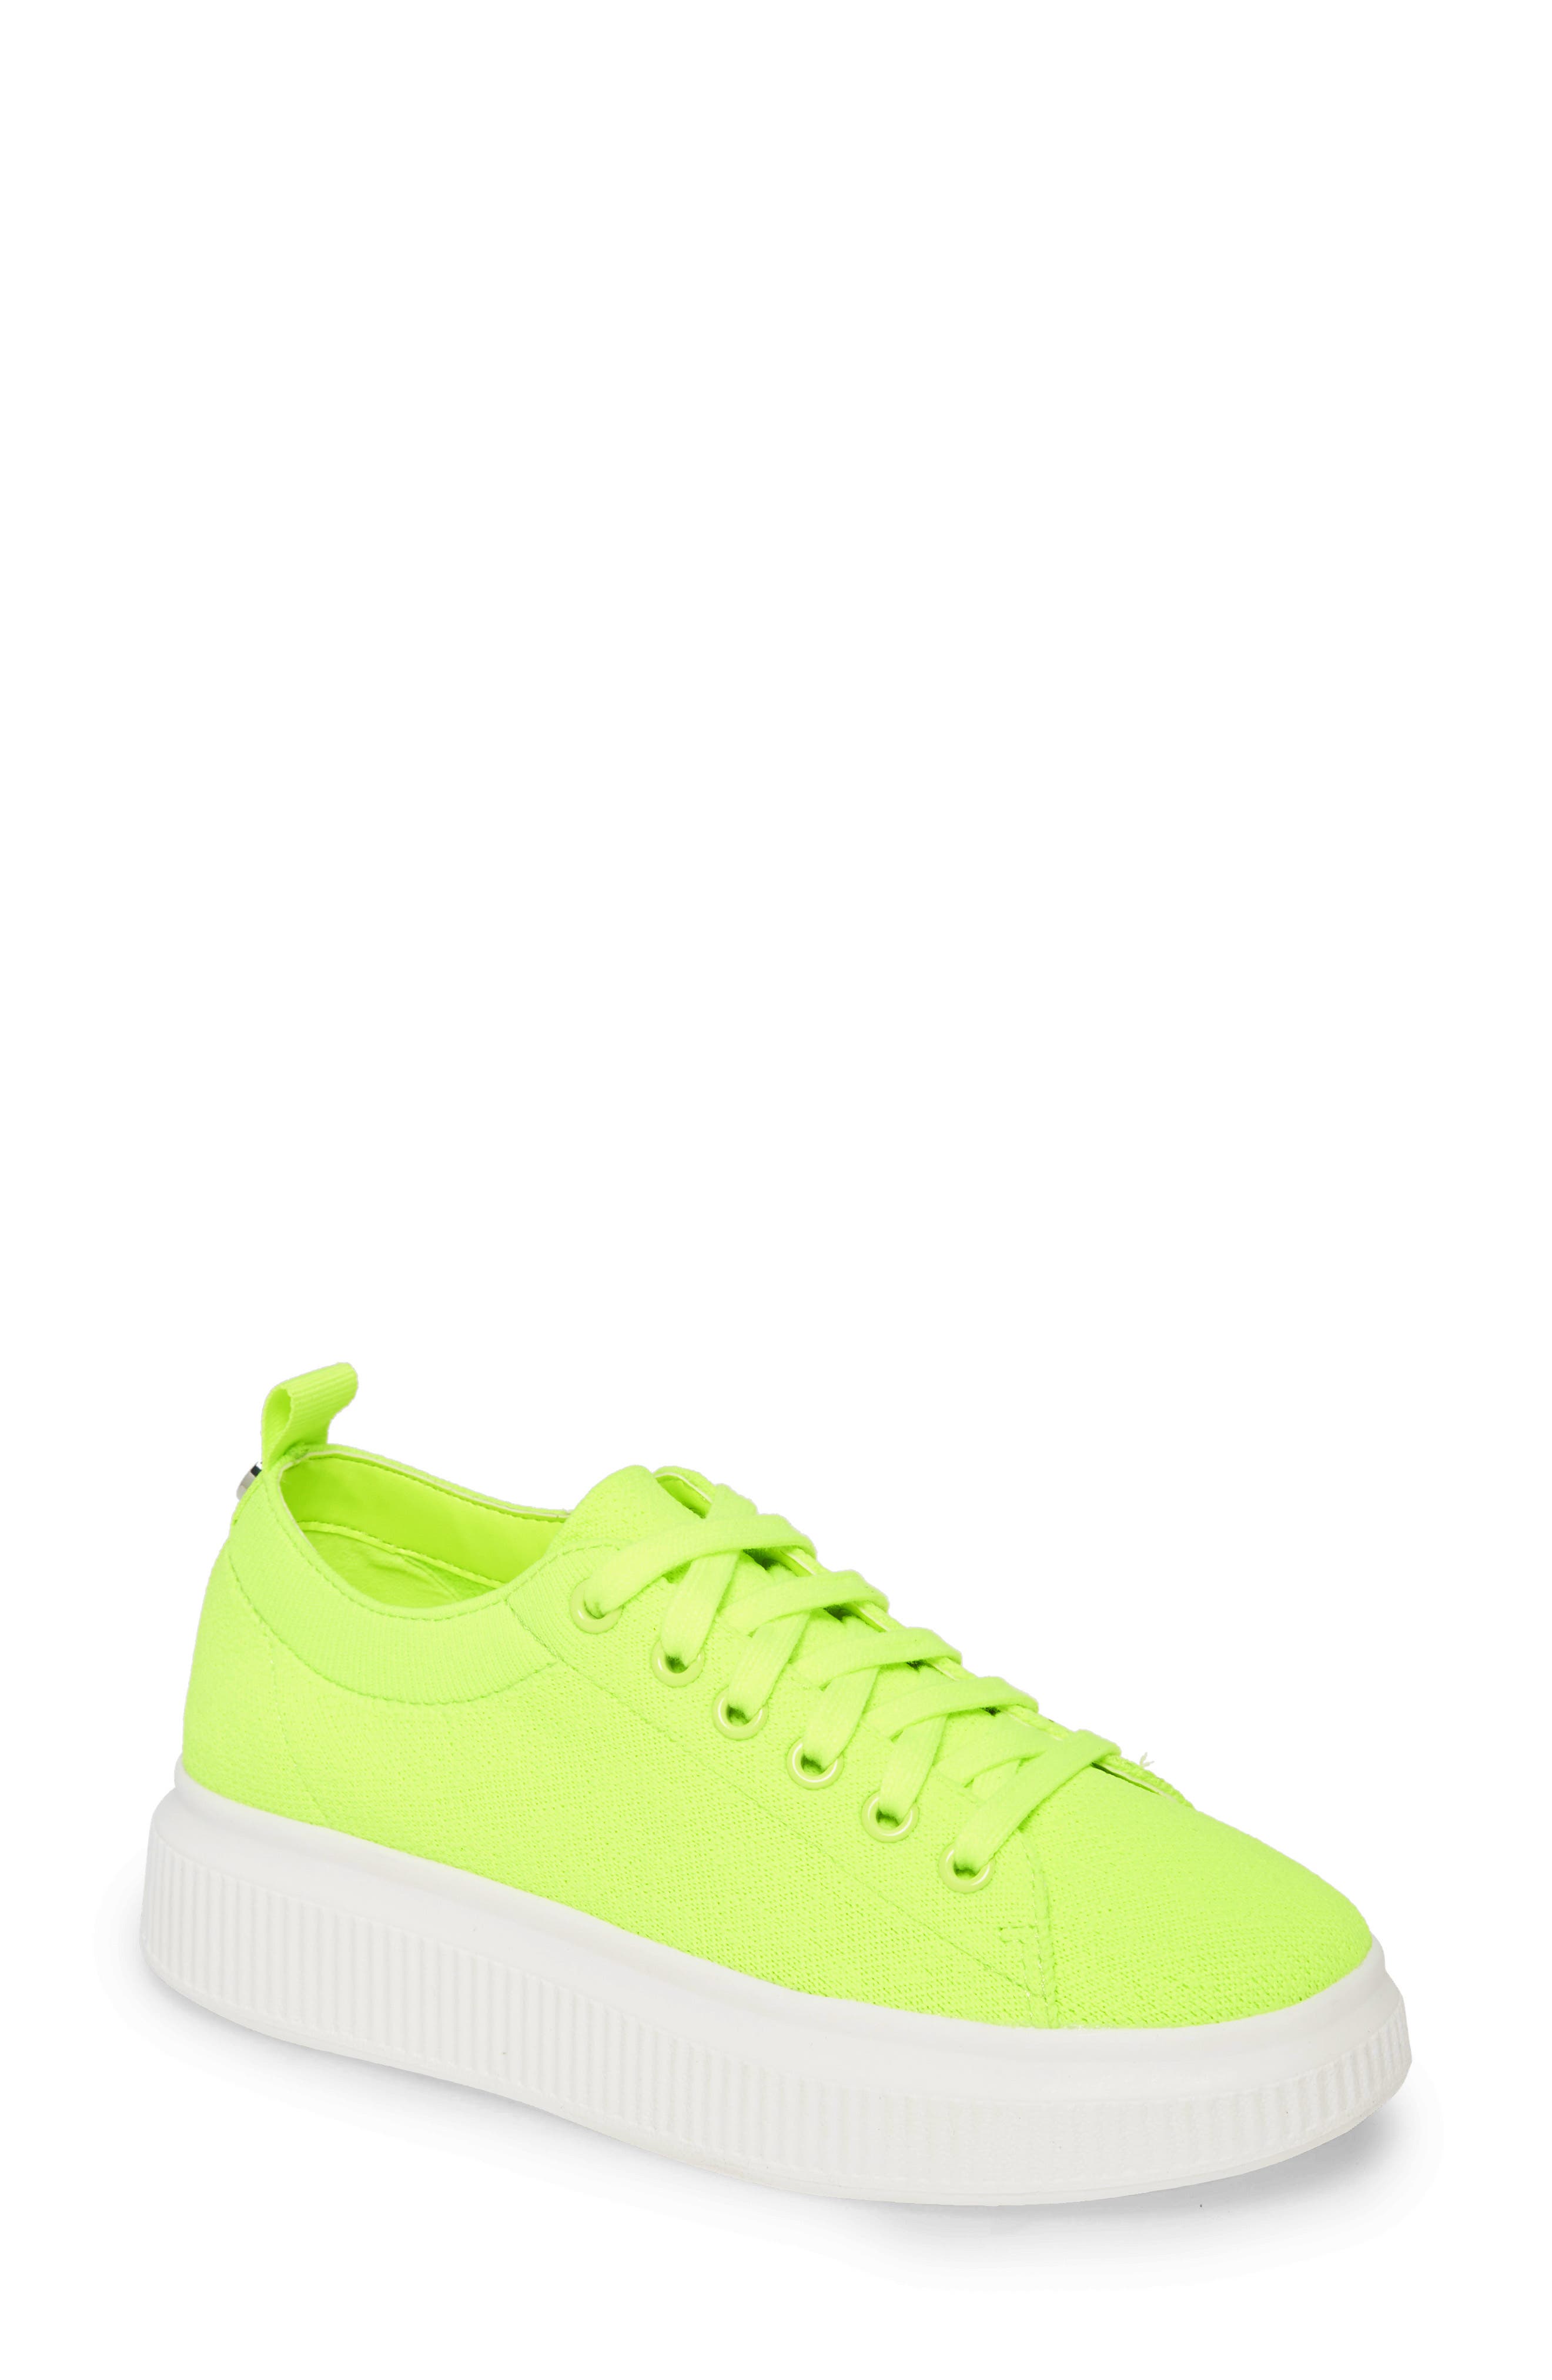 neon green sneakers womens cheap online